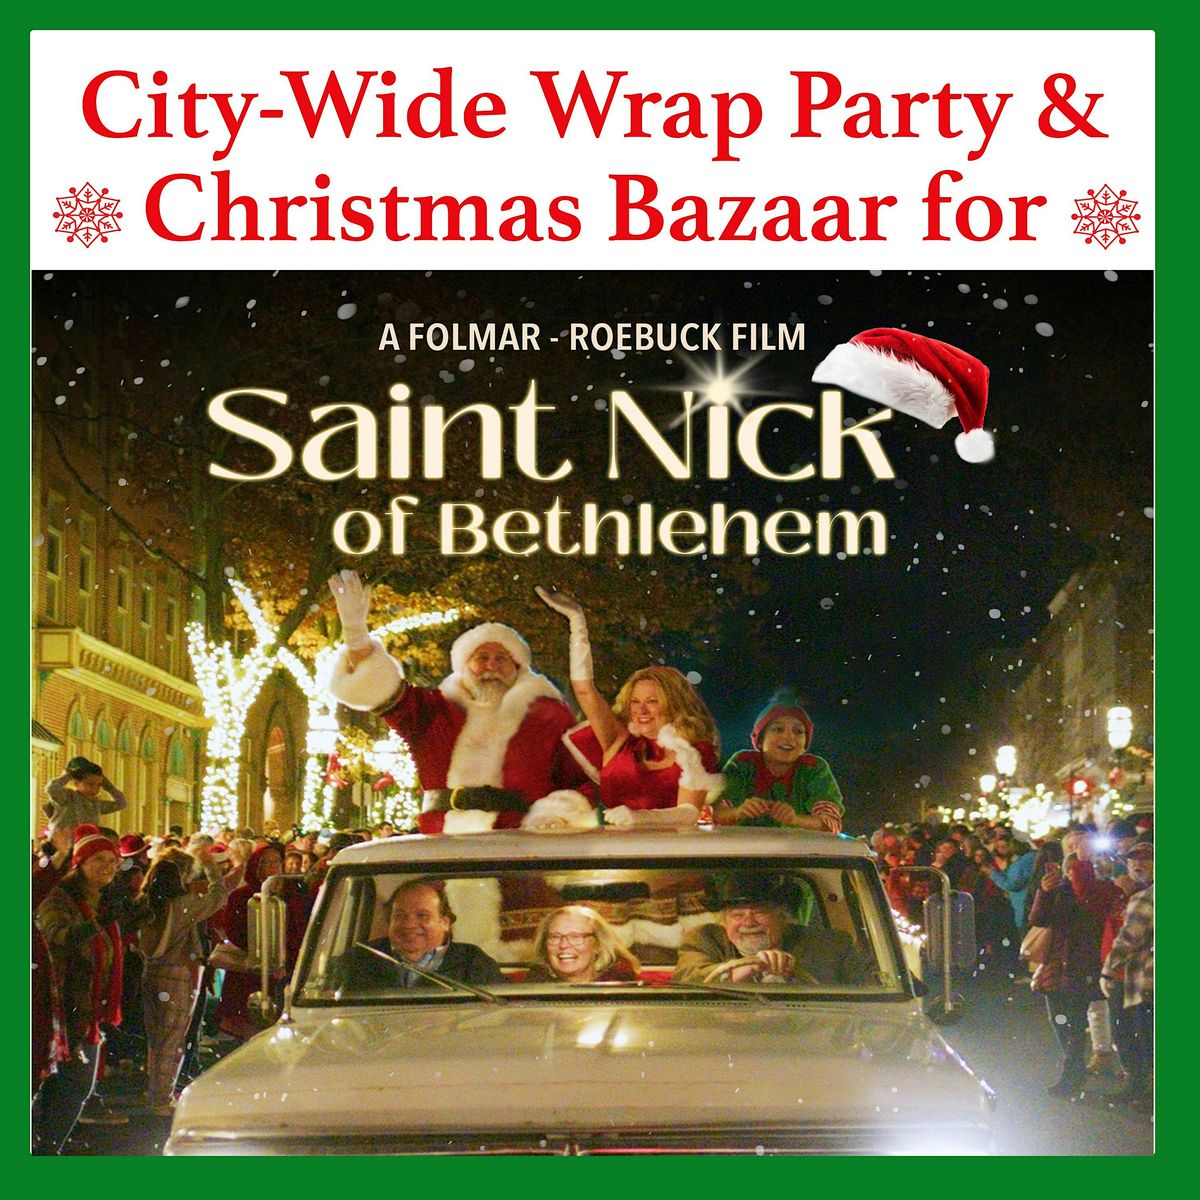 City-Wide Wrap Party & Christmas Bazaar for Saint Nick of Bethlehem